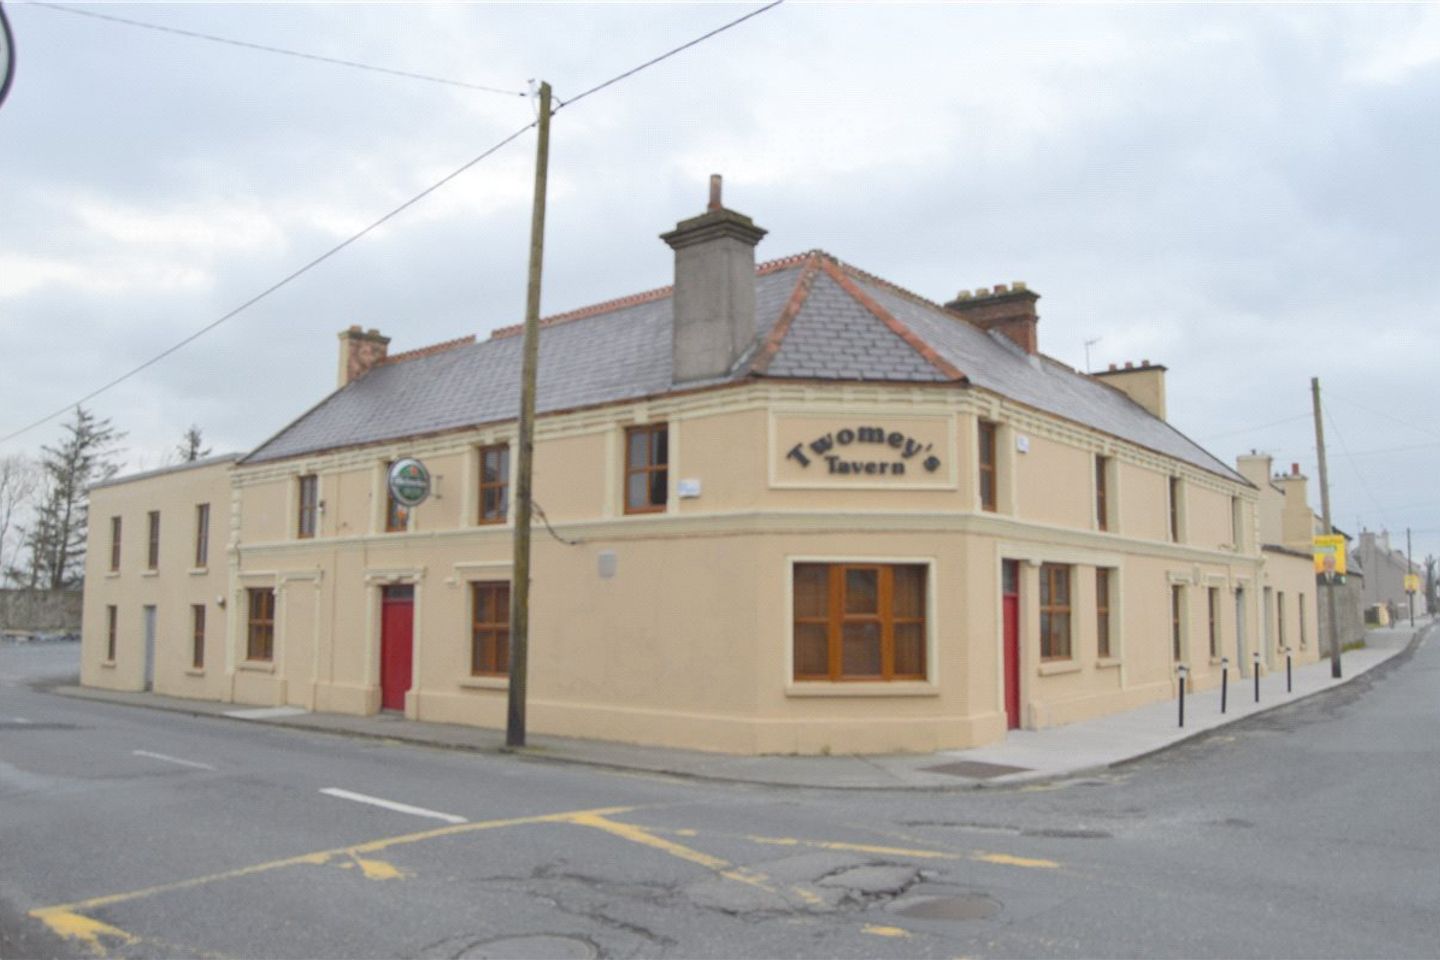 Twomey's Tavern, Abbeydorney, Tralee, Co. Kerry